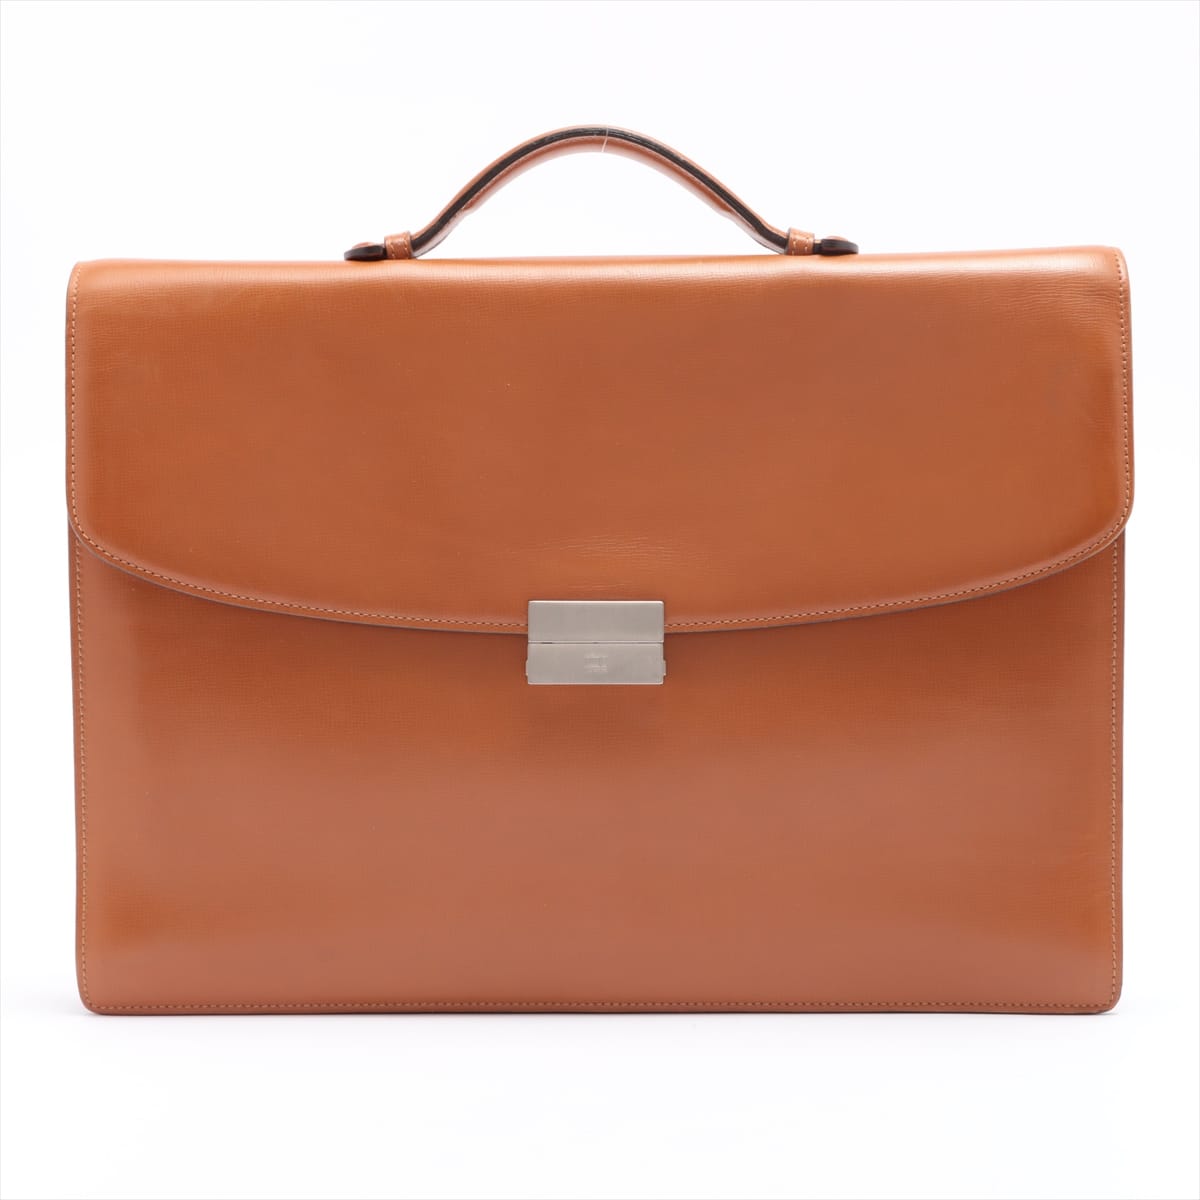 Valextra Leather Briefcase Brown